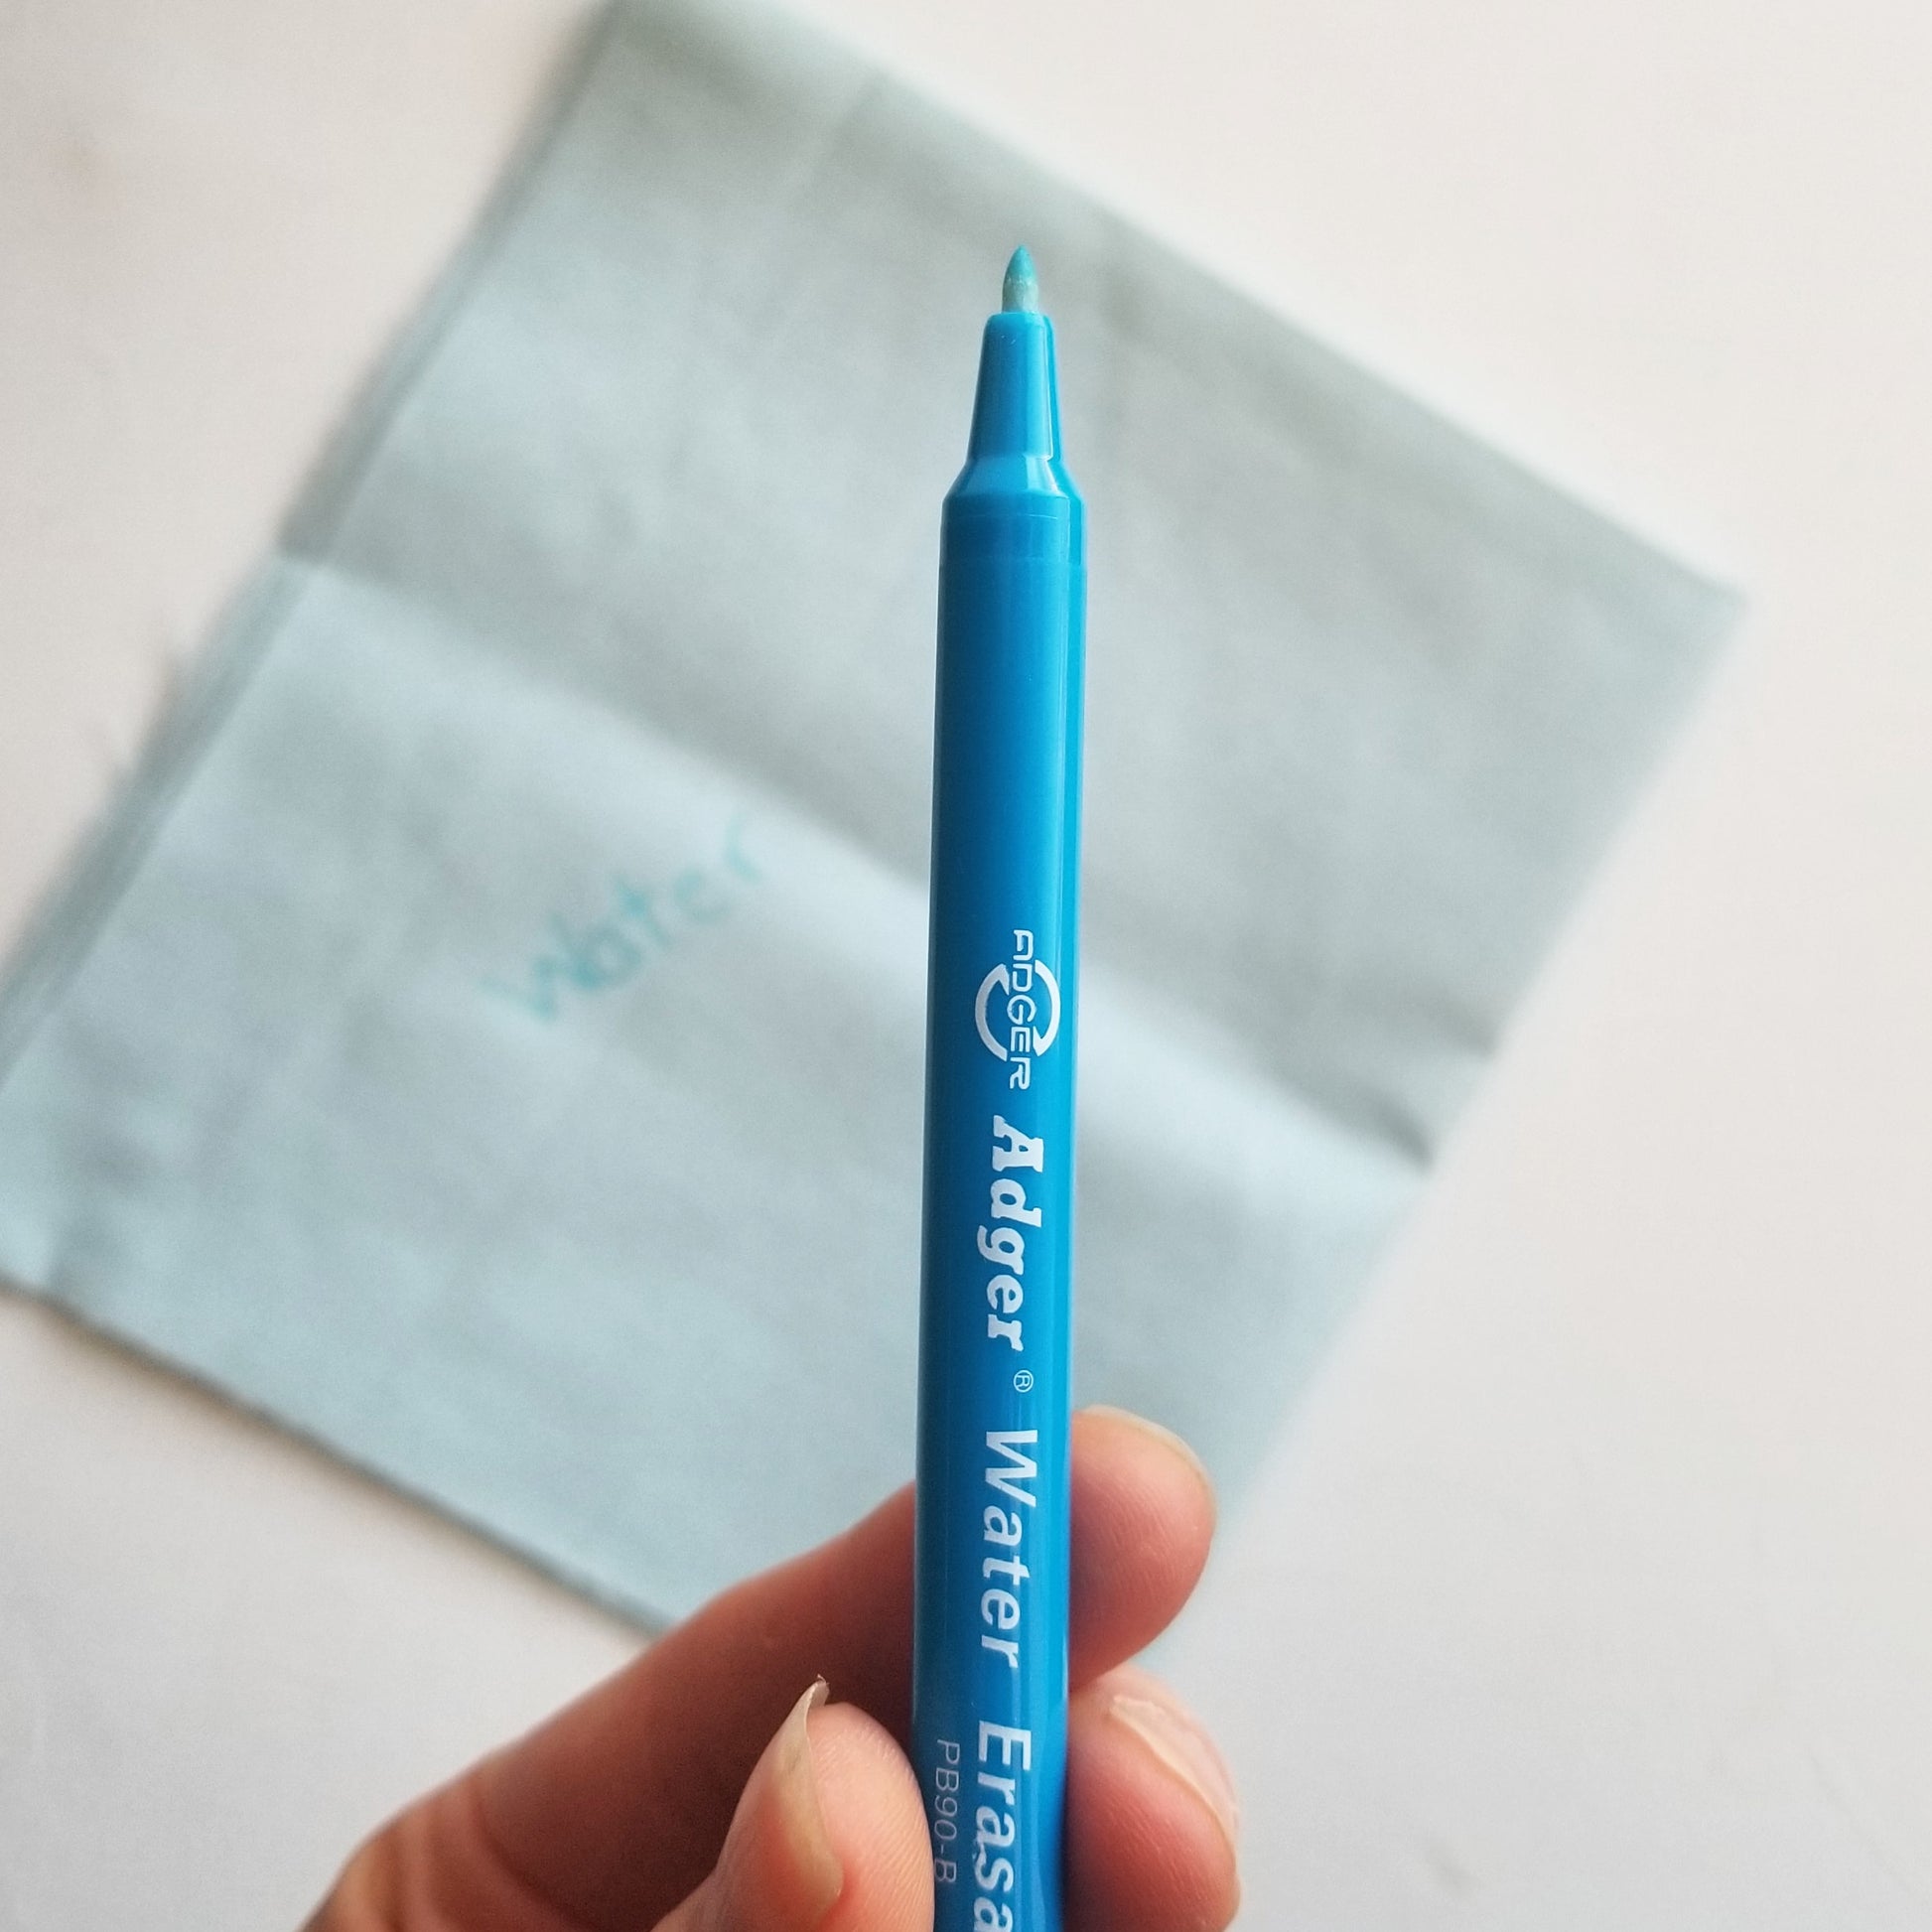 Dritz Water Erasable Marking Pen - Bright Blue